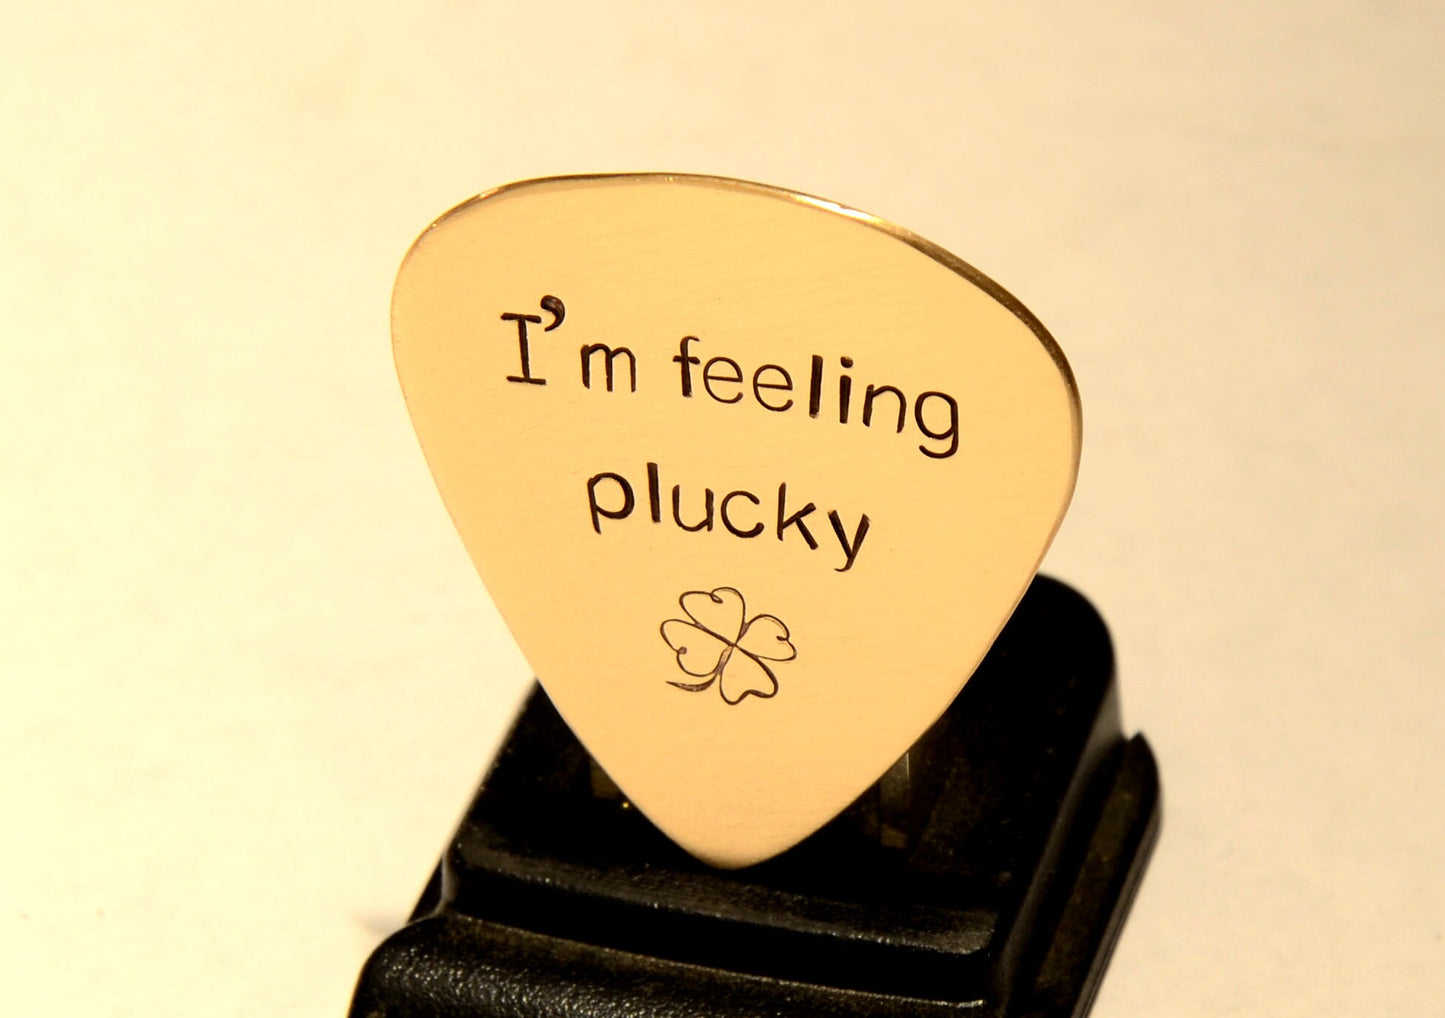 I’m Feeling Plucky guitar Pick in bronze